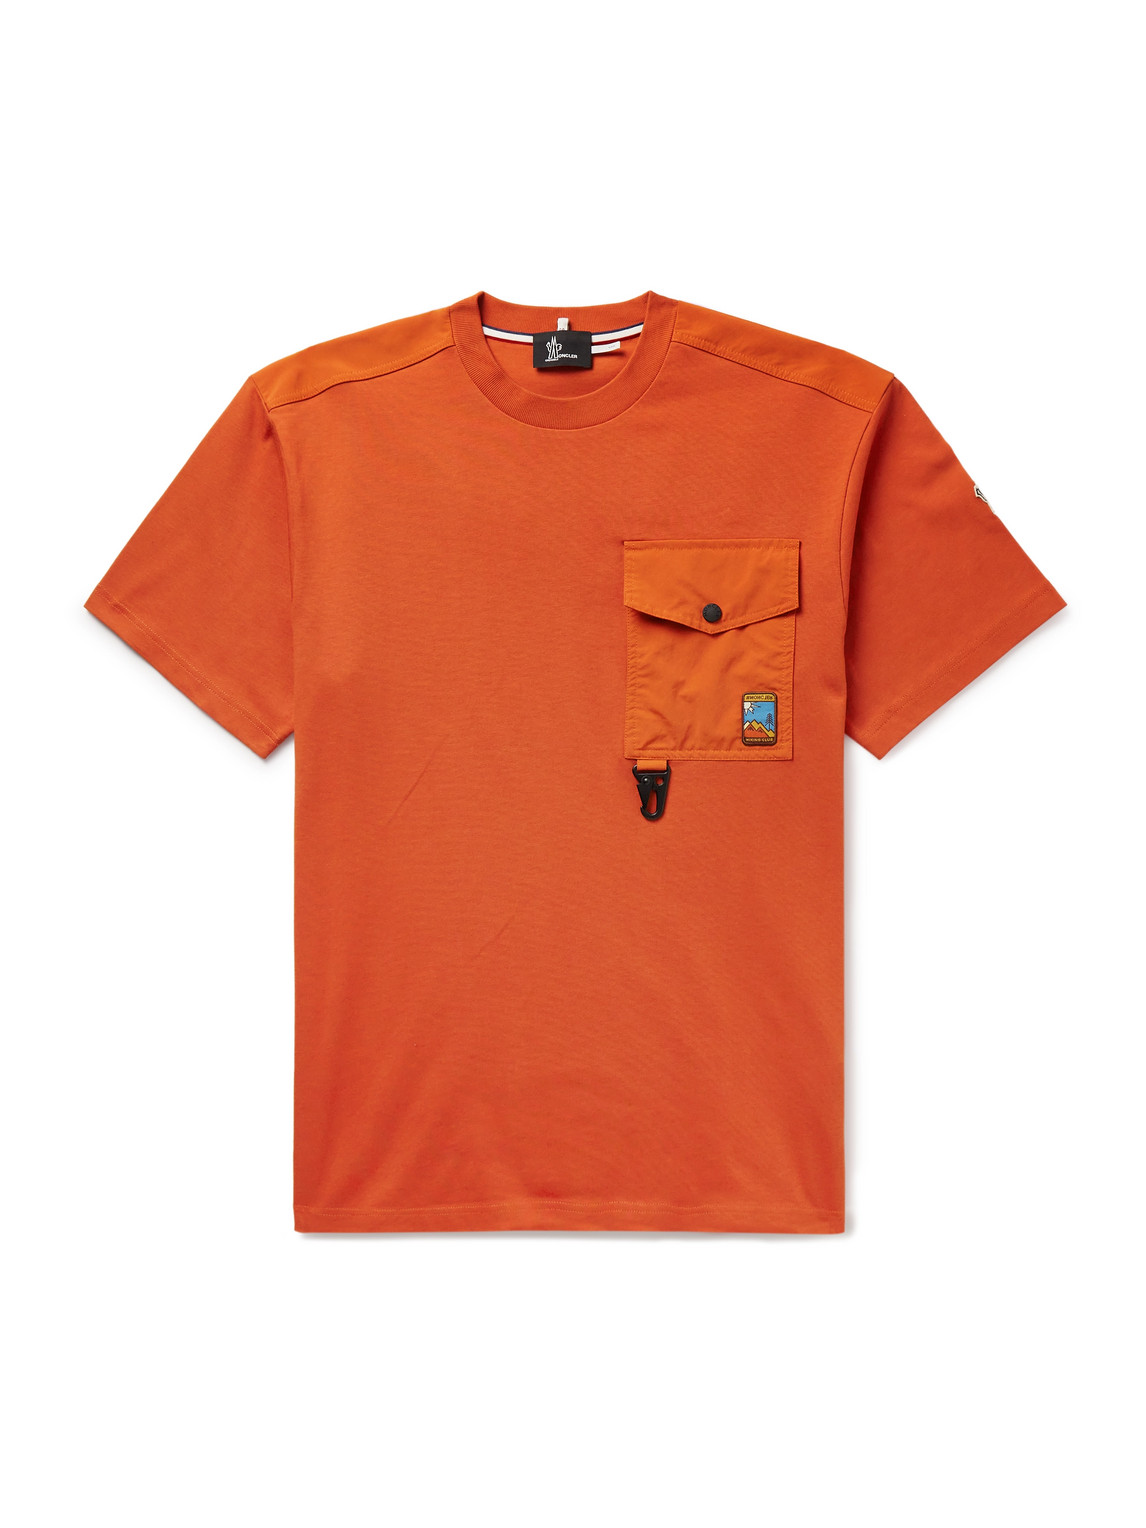 Moncler Grenoble - Logo-Appliquéd Shell-Trimmed Combed Cotton-Jersey T-Shirt - Men - Orange - S von Moncler Grenoble